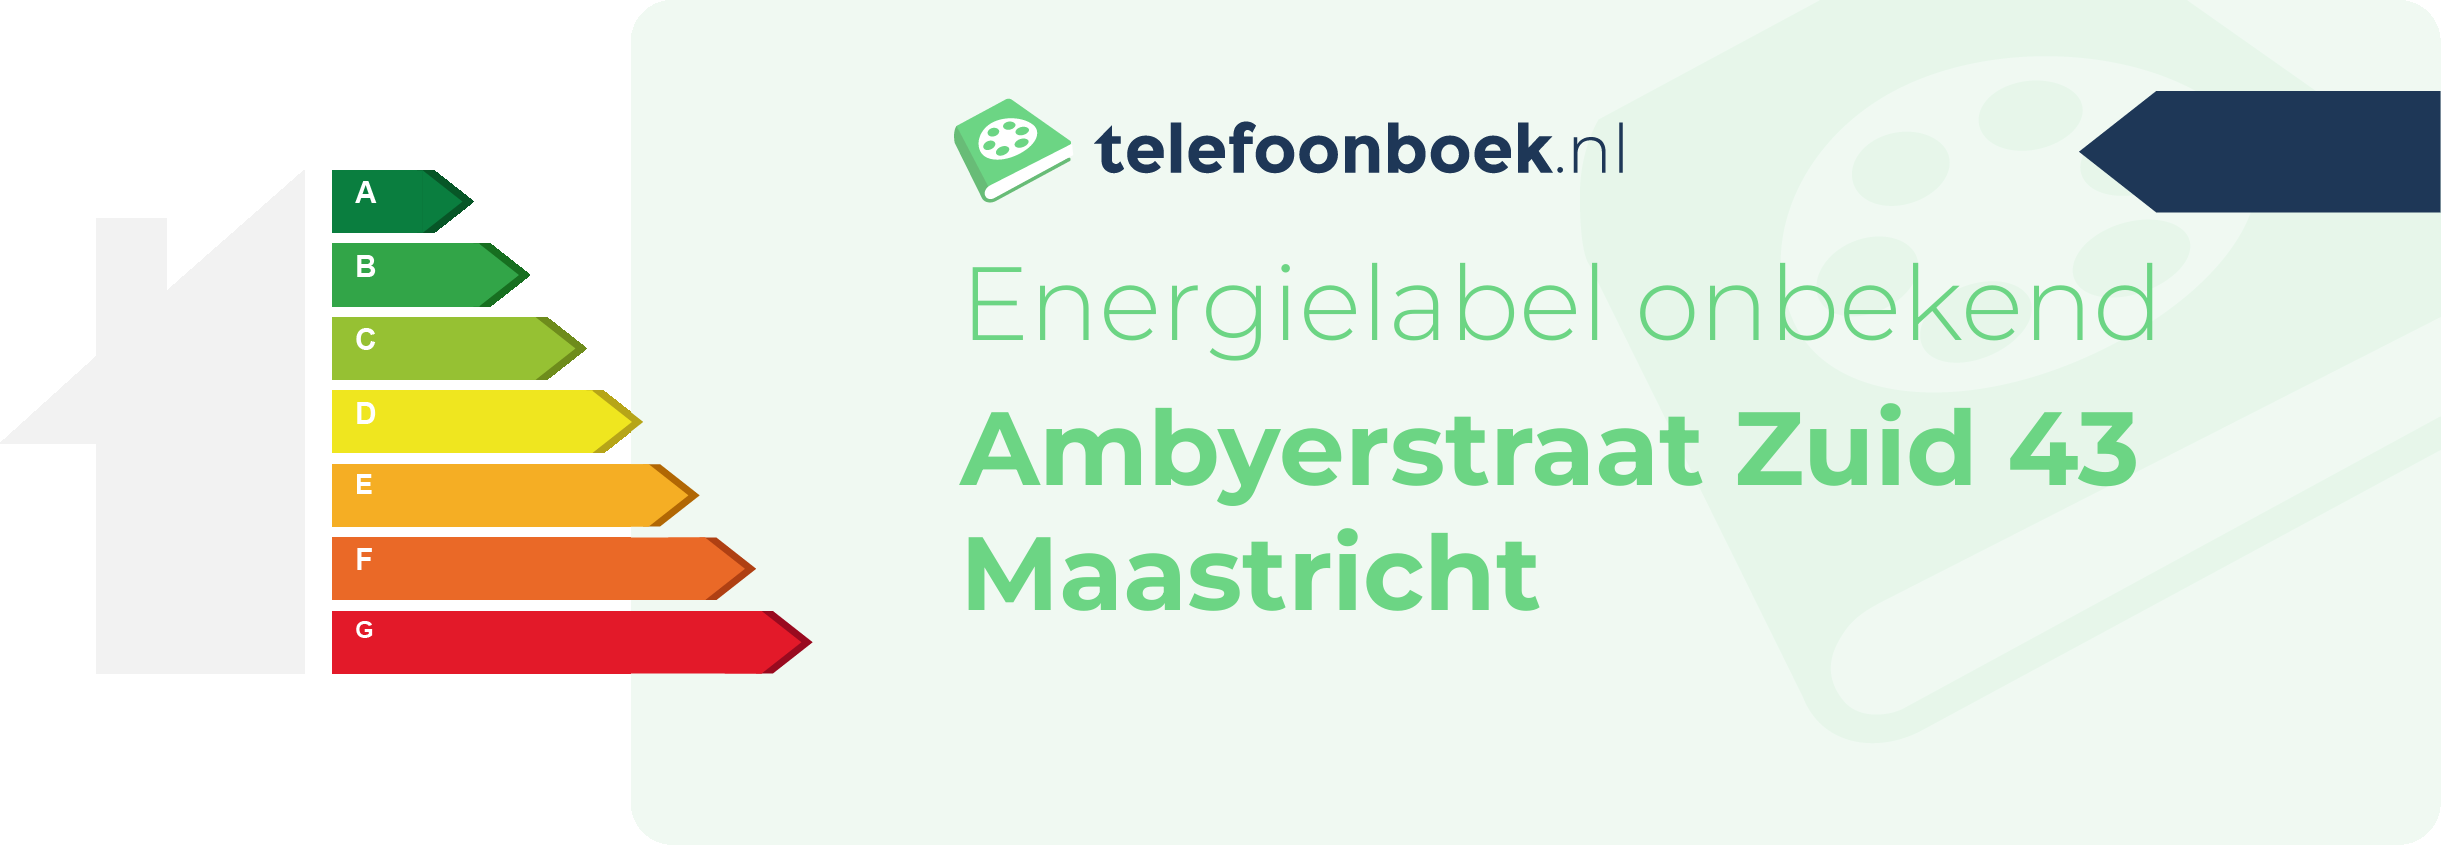 Energielabel Ambyerstraat Zuid 43 Maastricht